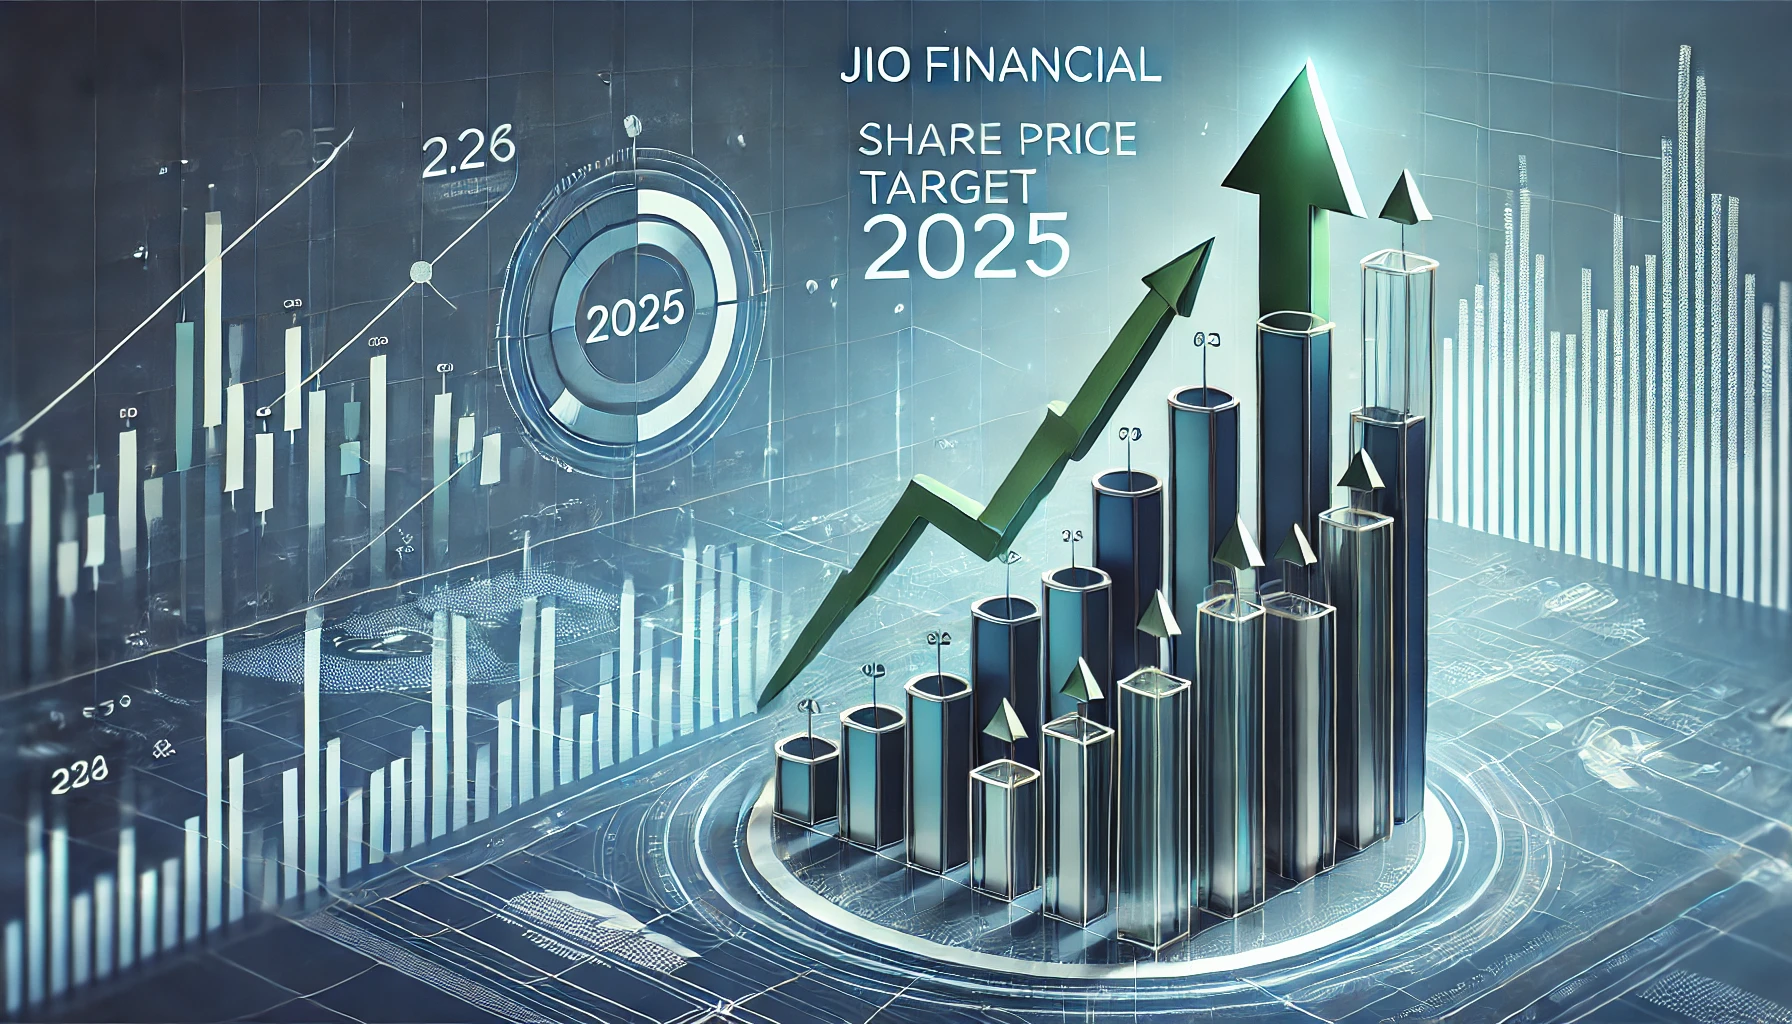 Jio Financial Share Price Target 2025